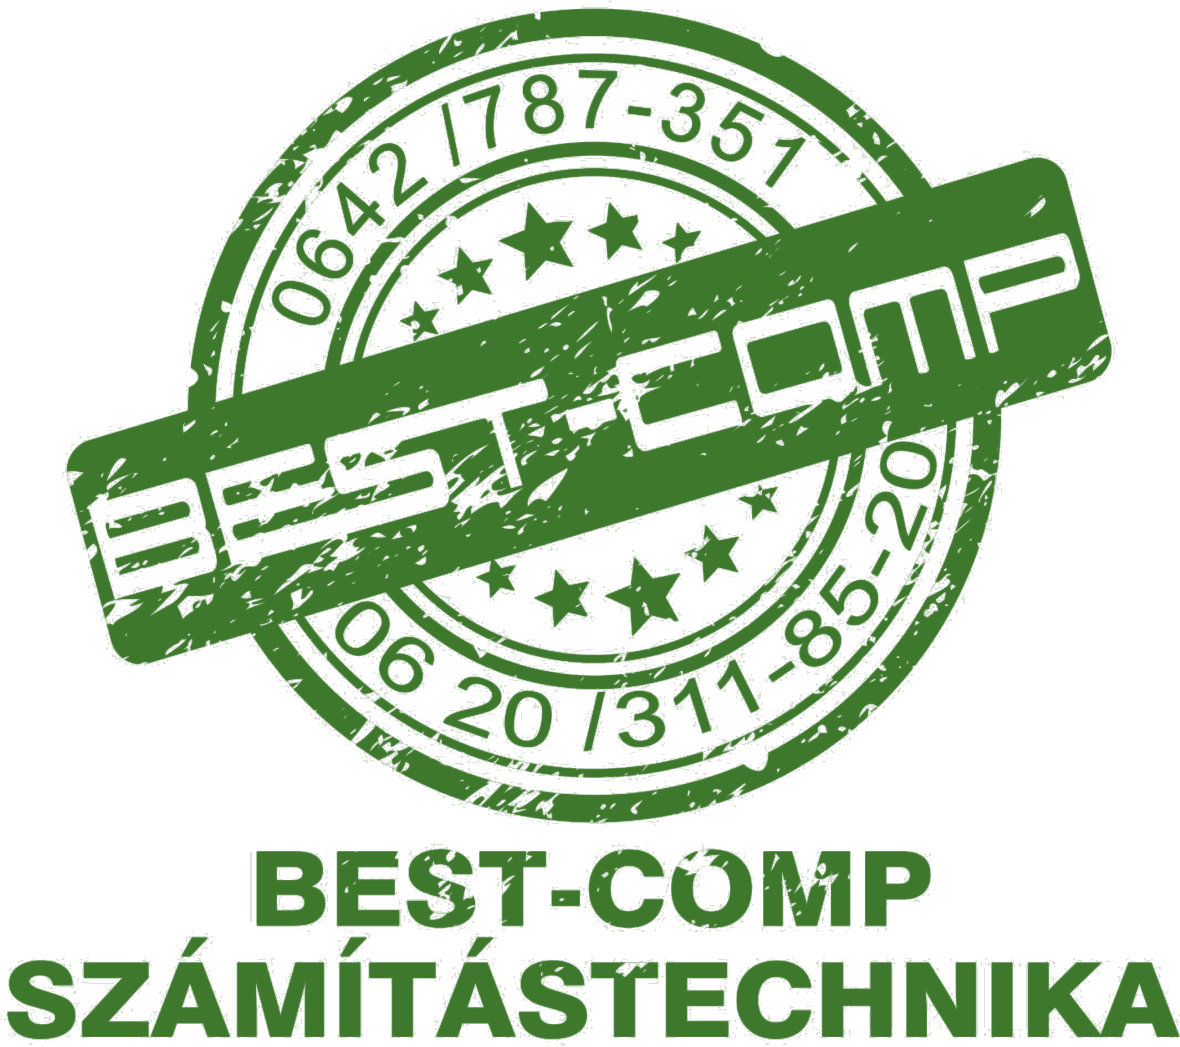 Best-comp logo